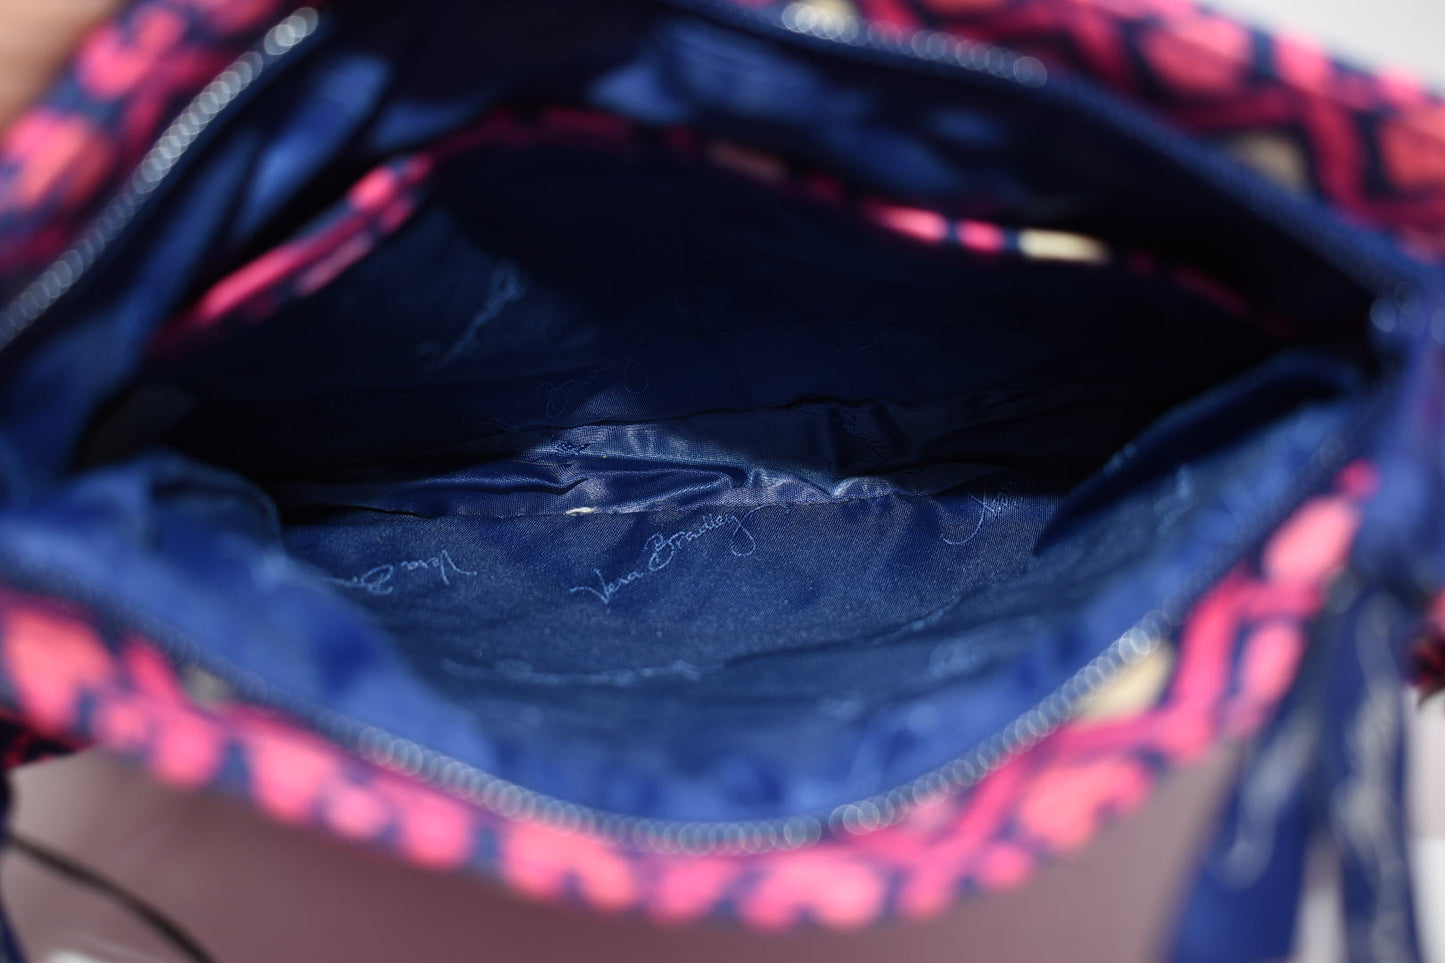 Vera Bradley Double-Zip Hipster Crossbody Bag in "Katalina Pink Diamond" Pattern